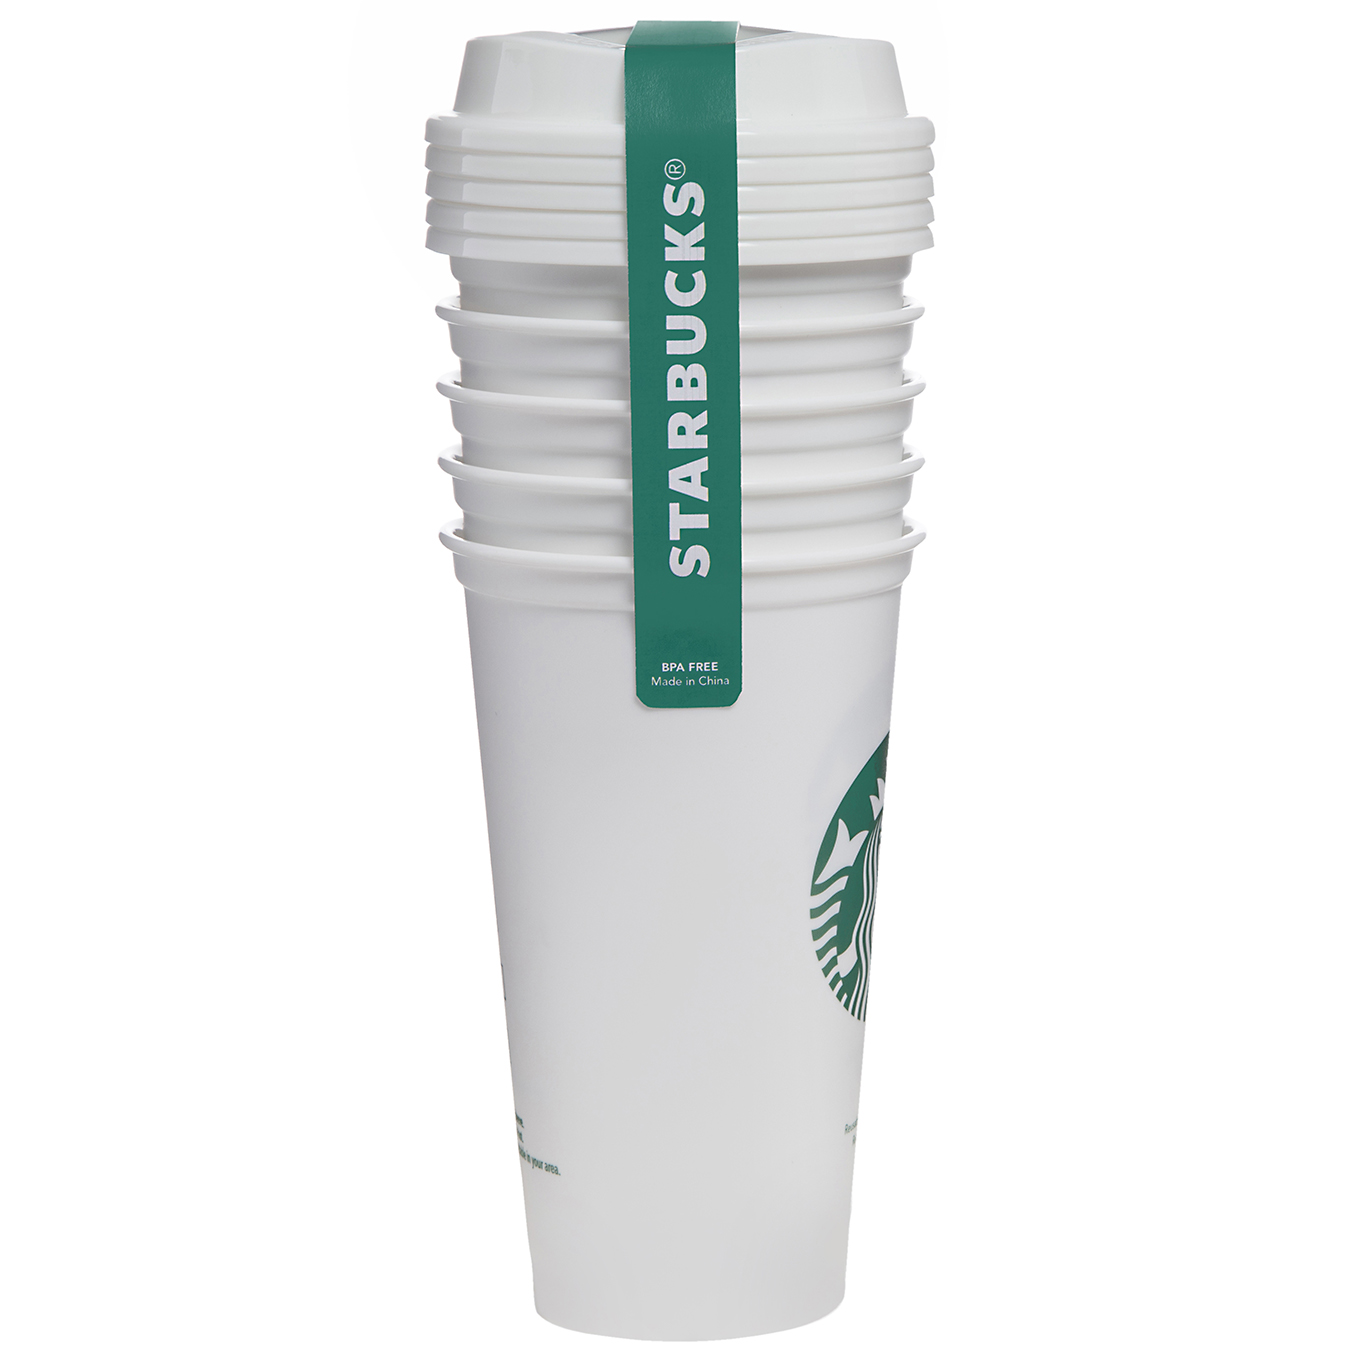 Starbucks 16oz Reusable Cups 5-Pack White - image 4 of 7